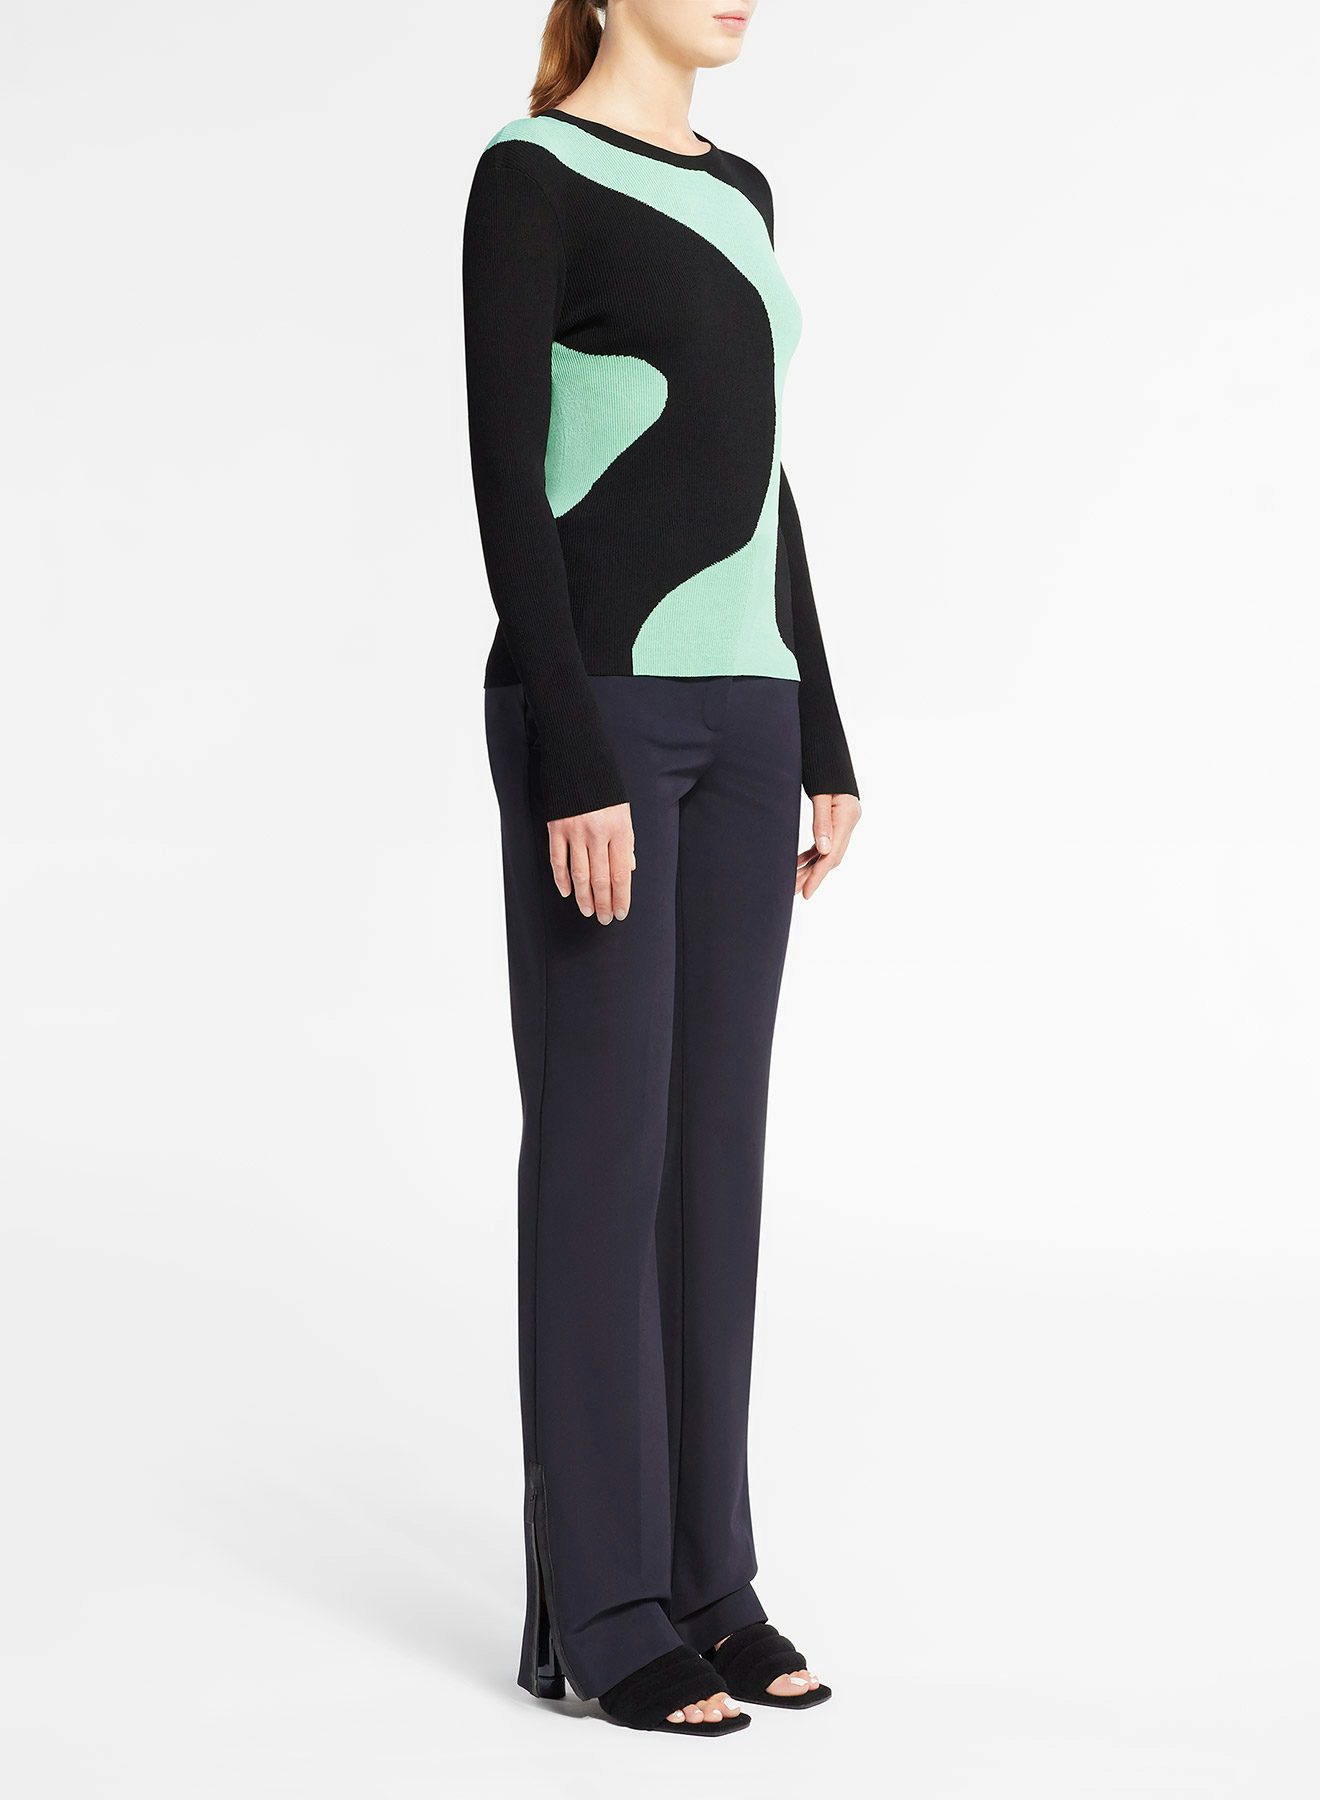 Long-sleeved sweater in black and water green intarsia - Nina Ricci